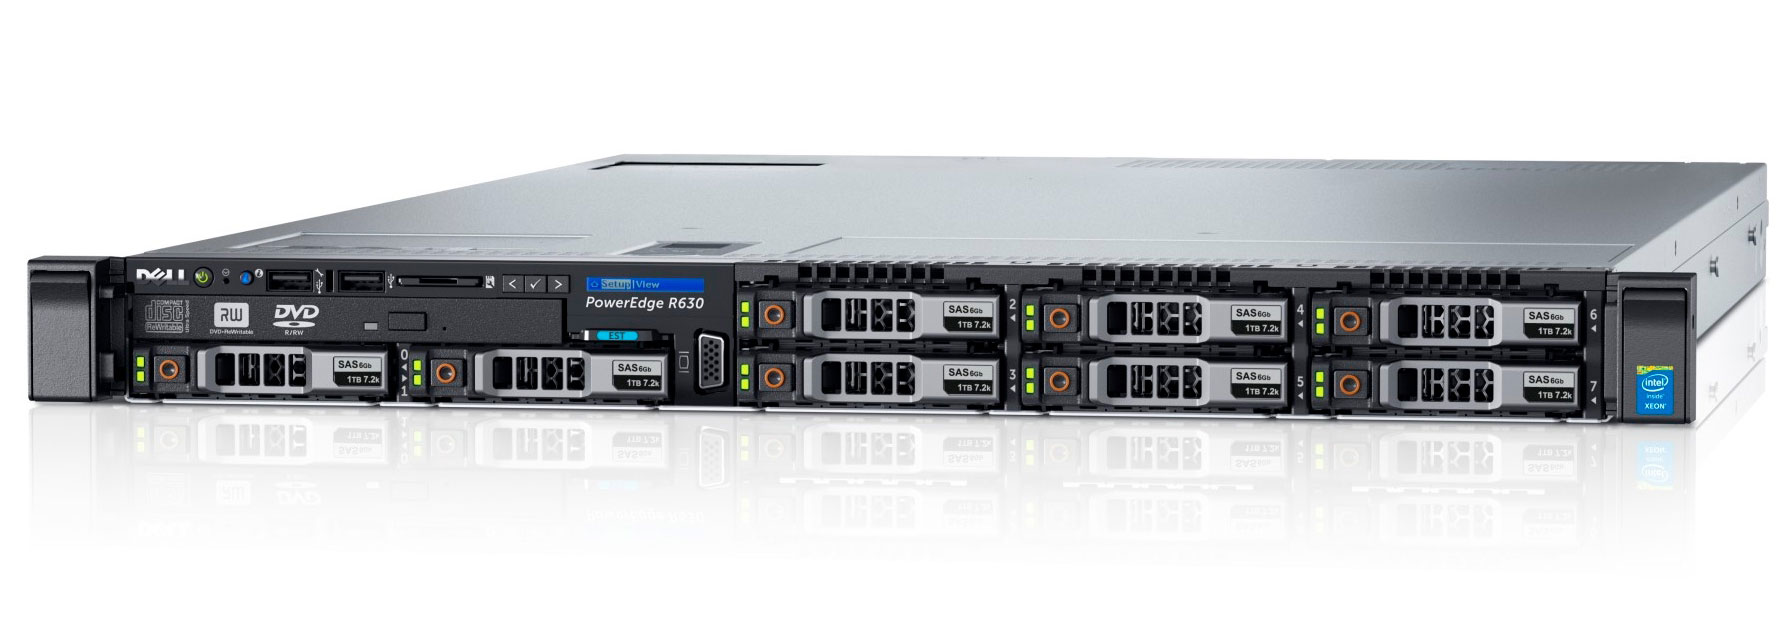 Подробное фото Сервер DELL PowerEdge R630 Xeon 2x E5-2680v4 256Gb 2133P DDR4 8x noHDD 2.5", SAS RAID Perc H730, 1024Mb, DVD, 2*PSU